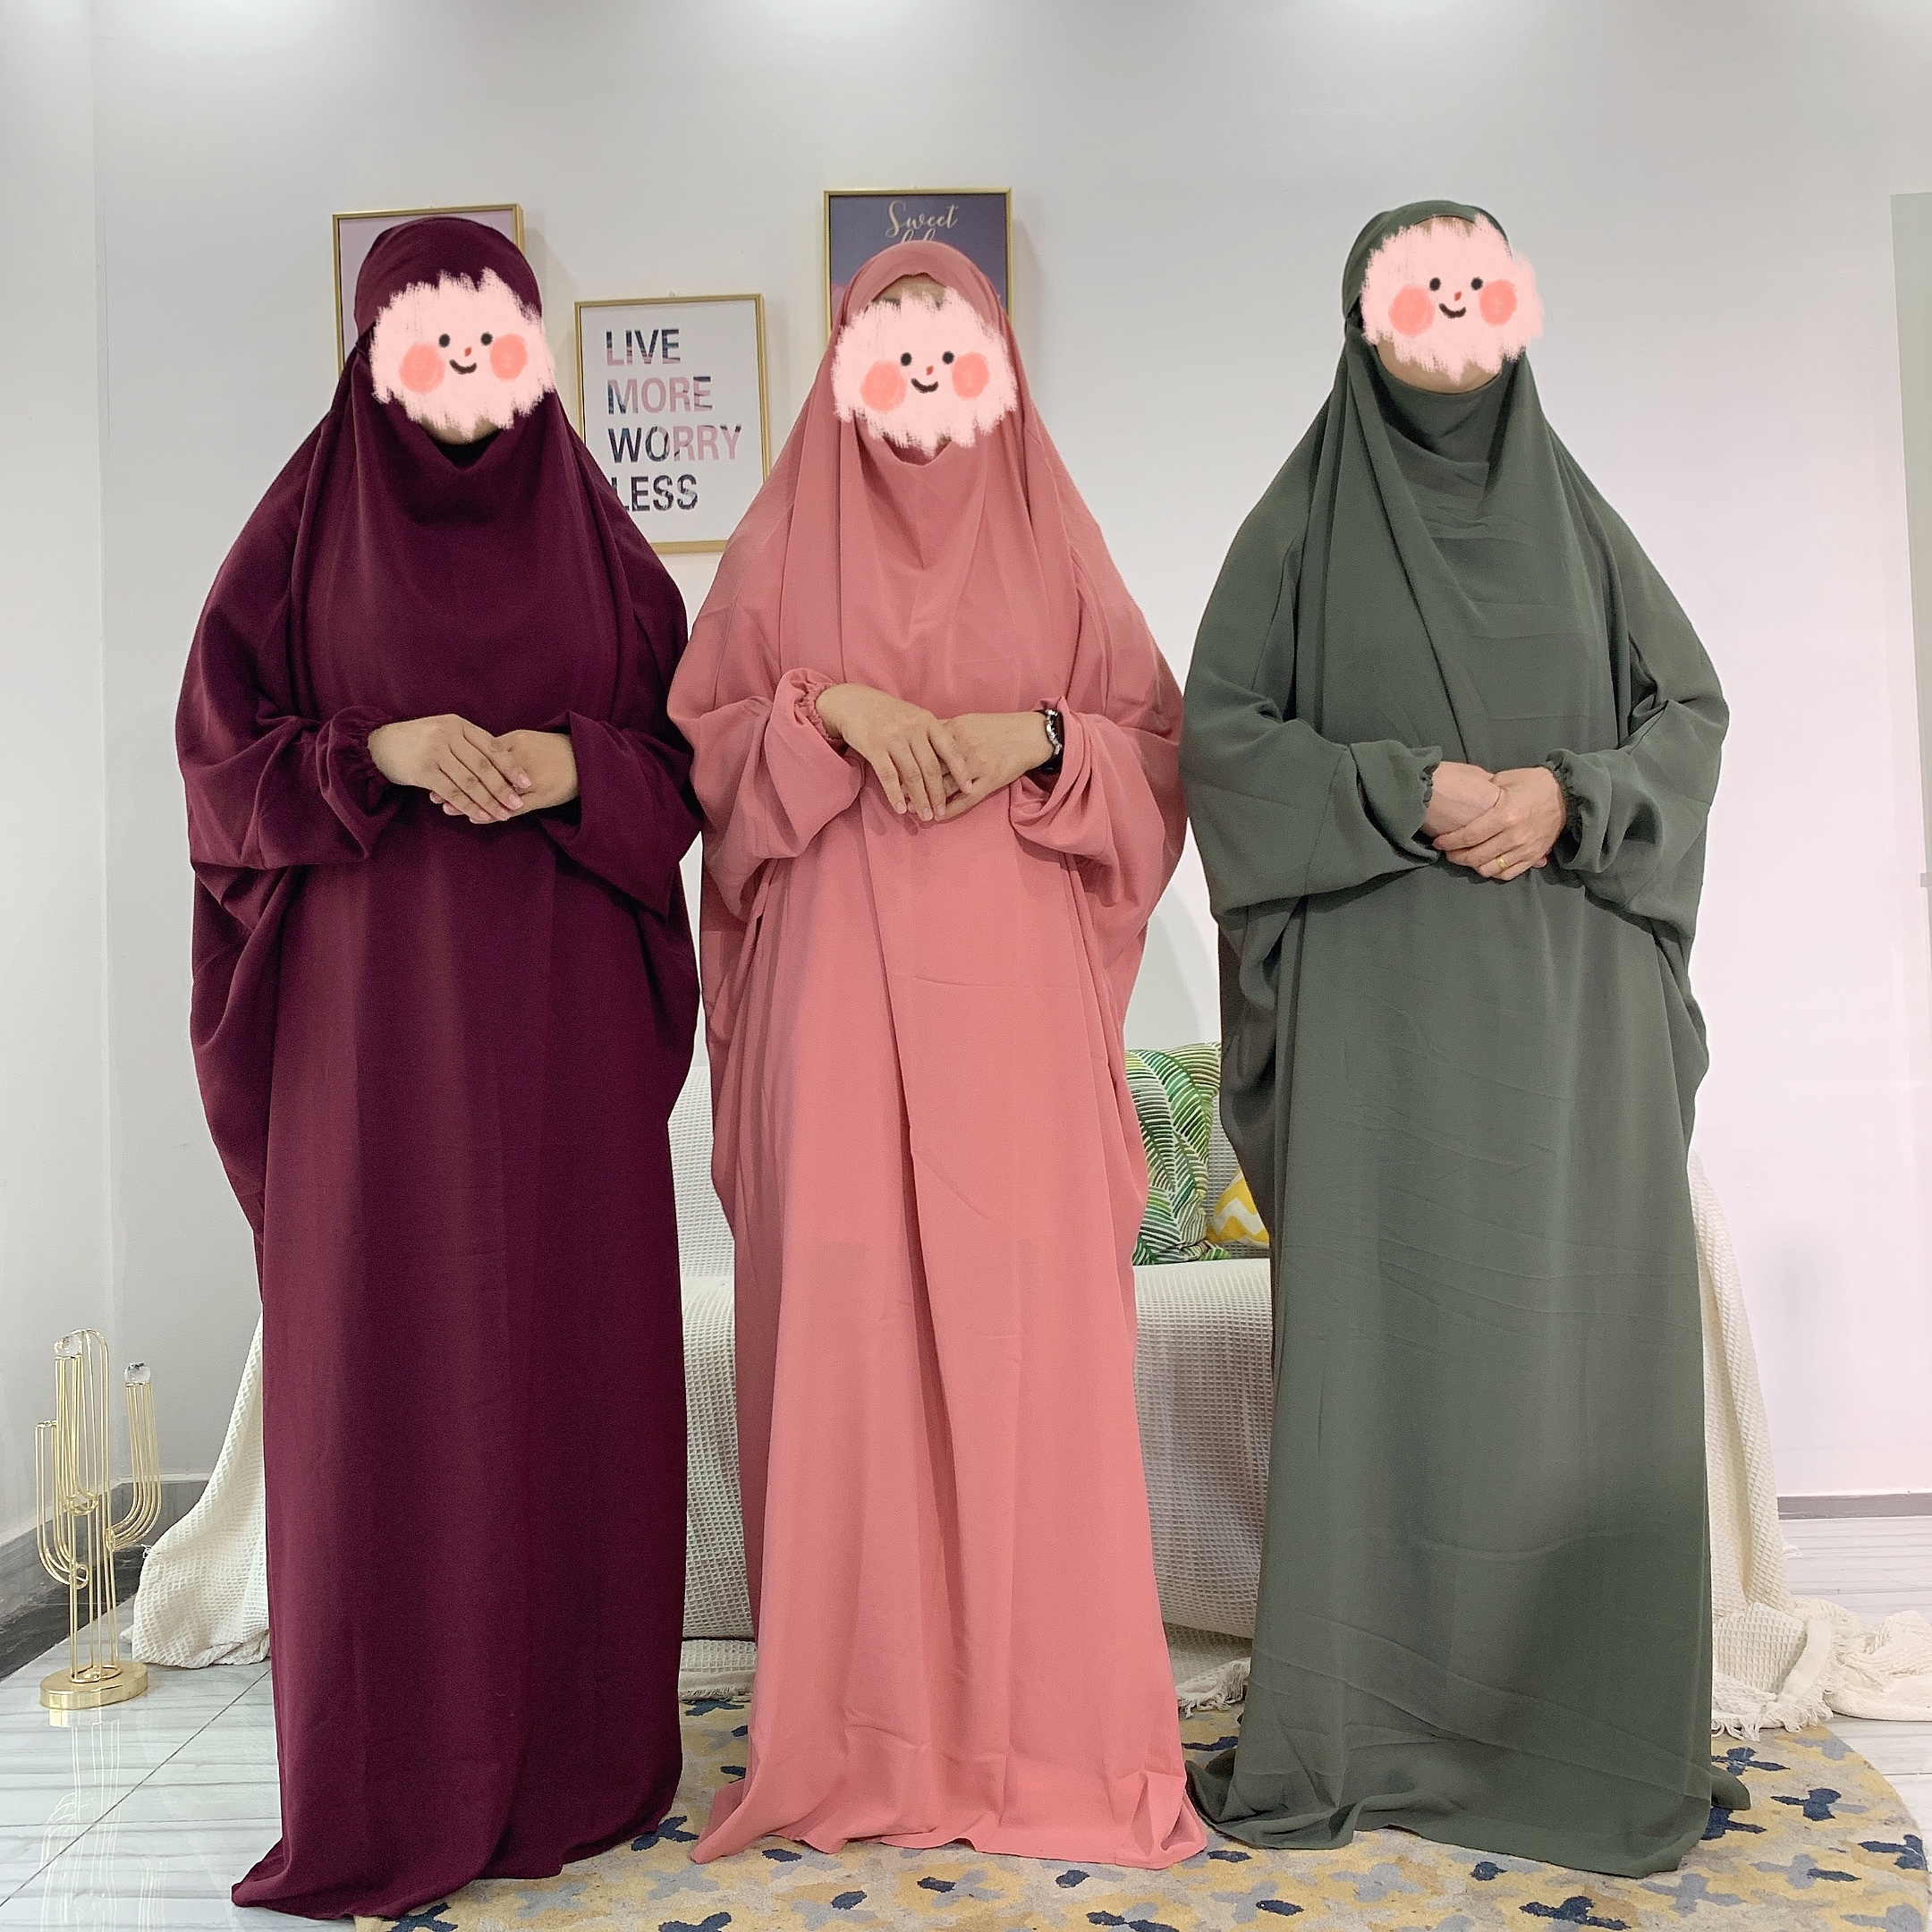 2021 Dec New Arrival One Piece Full Length Jilbab Prayer Abaya High Quality Shinny Polyester Dresses